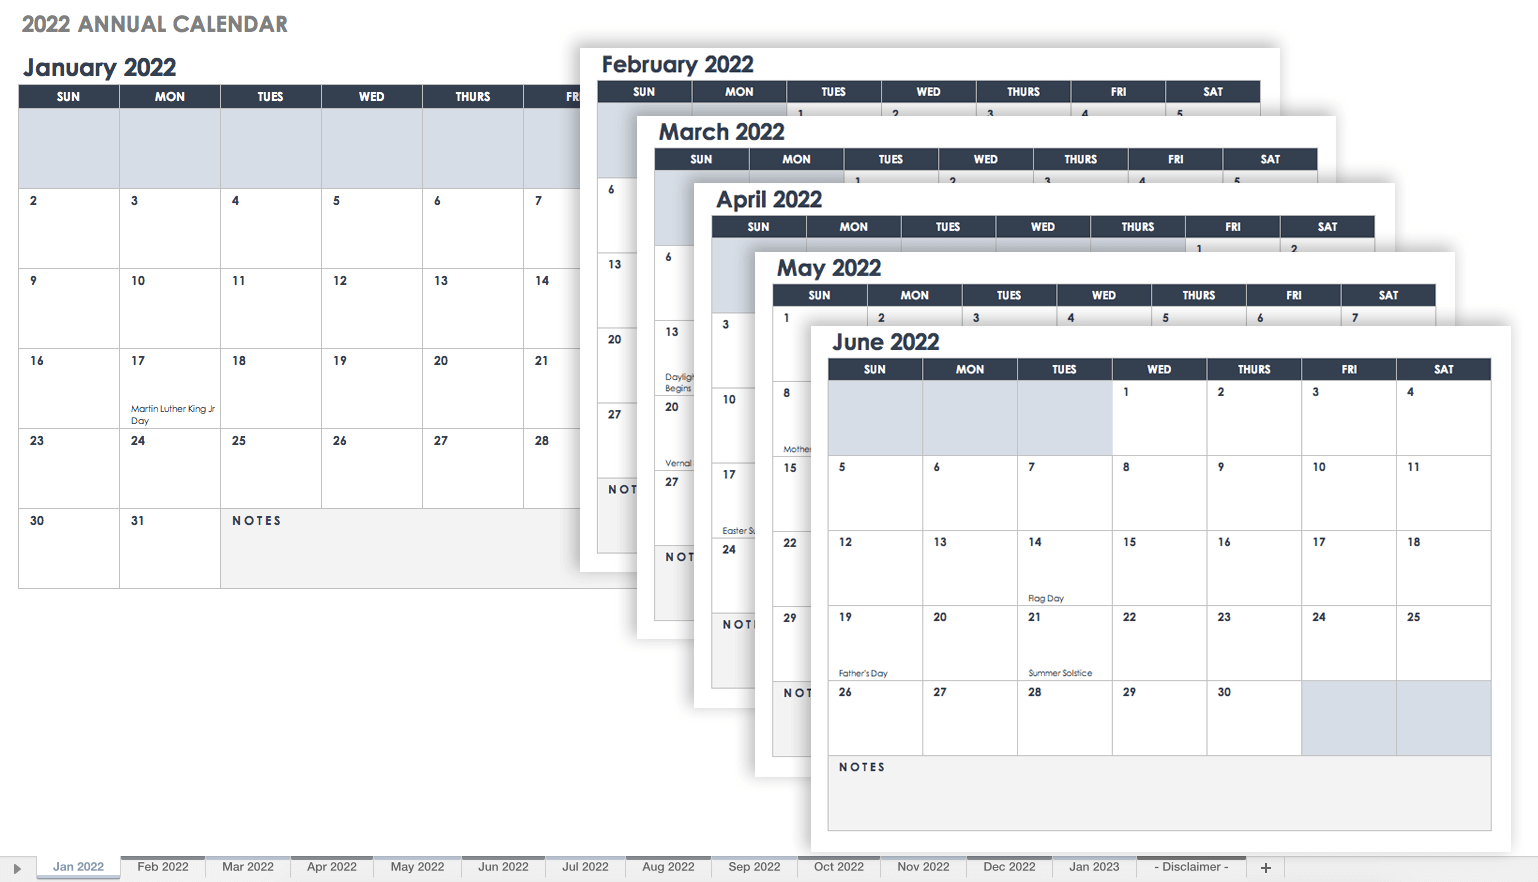 2022 Annual Calendar Template